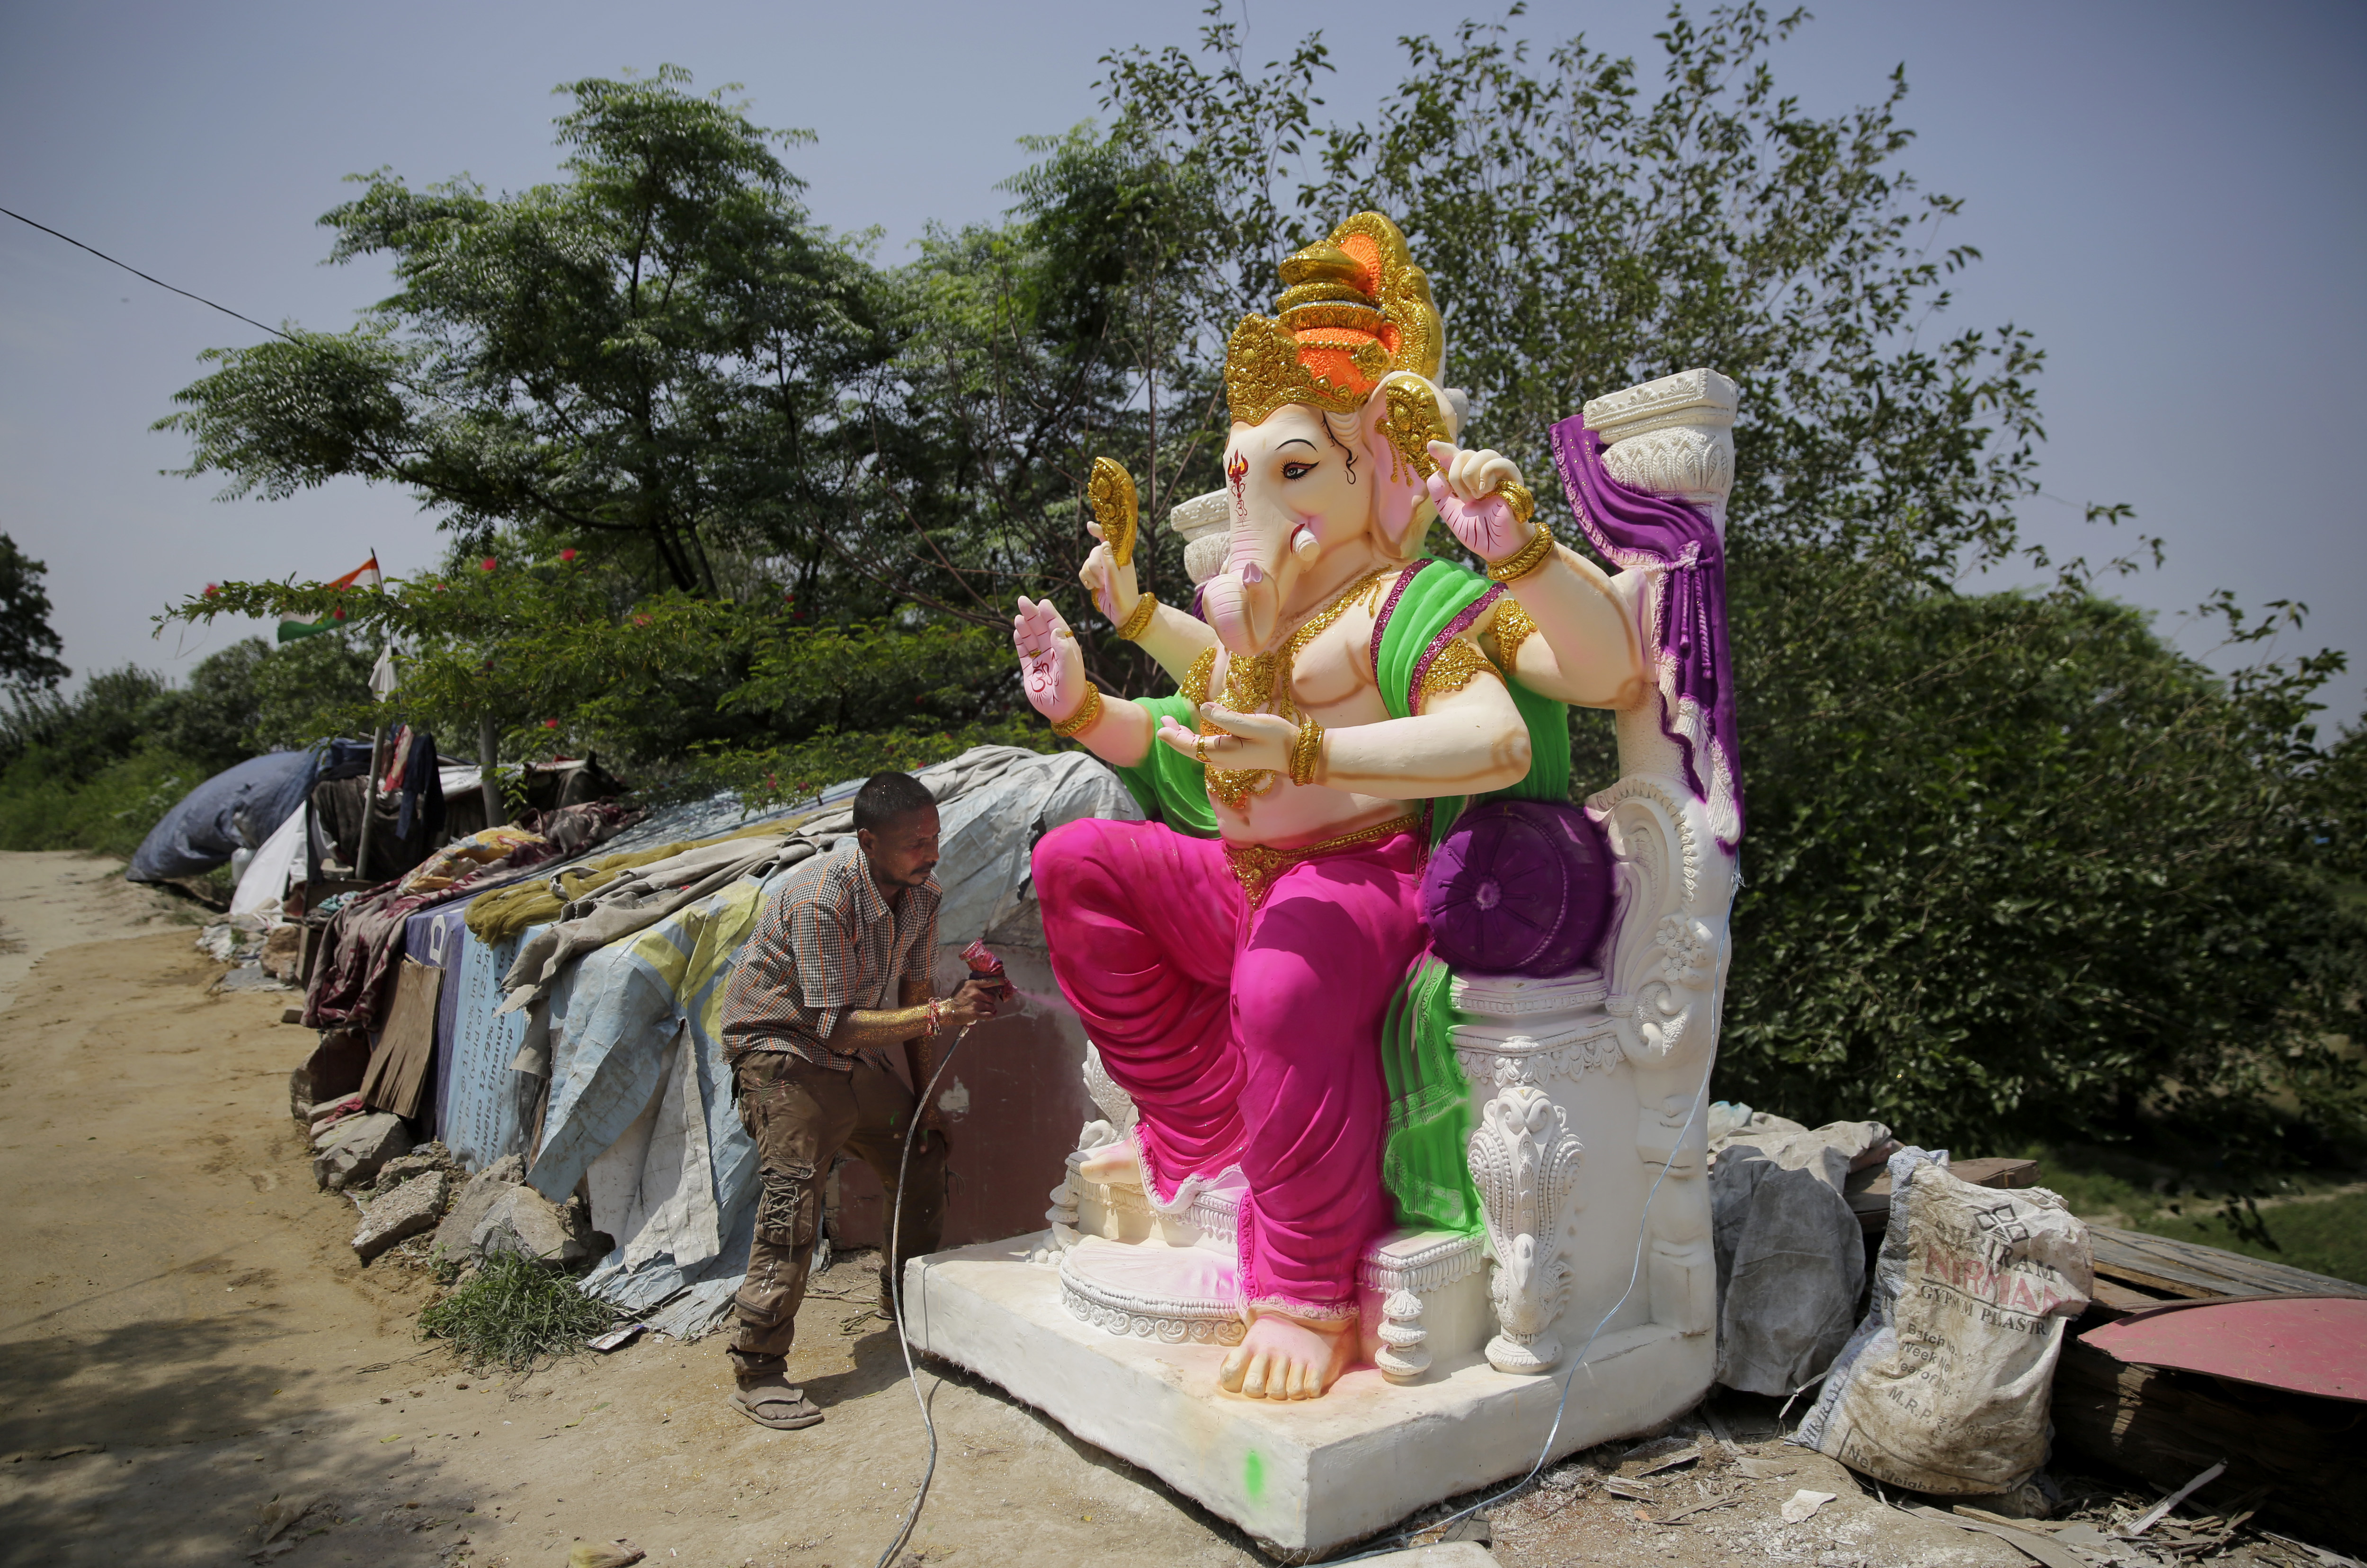 An Indian sprays paint on an idol of Hindu god Ganesha in New Delhi, India, Wednesday, Sept. 12, 2018. The idols are being prepared ahead of the 'Ganesh Chaturthi' festival that celebrates the birthday of the elephant headed god. (AP Photo/Altaf Qadri)